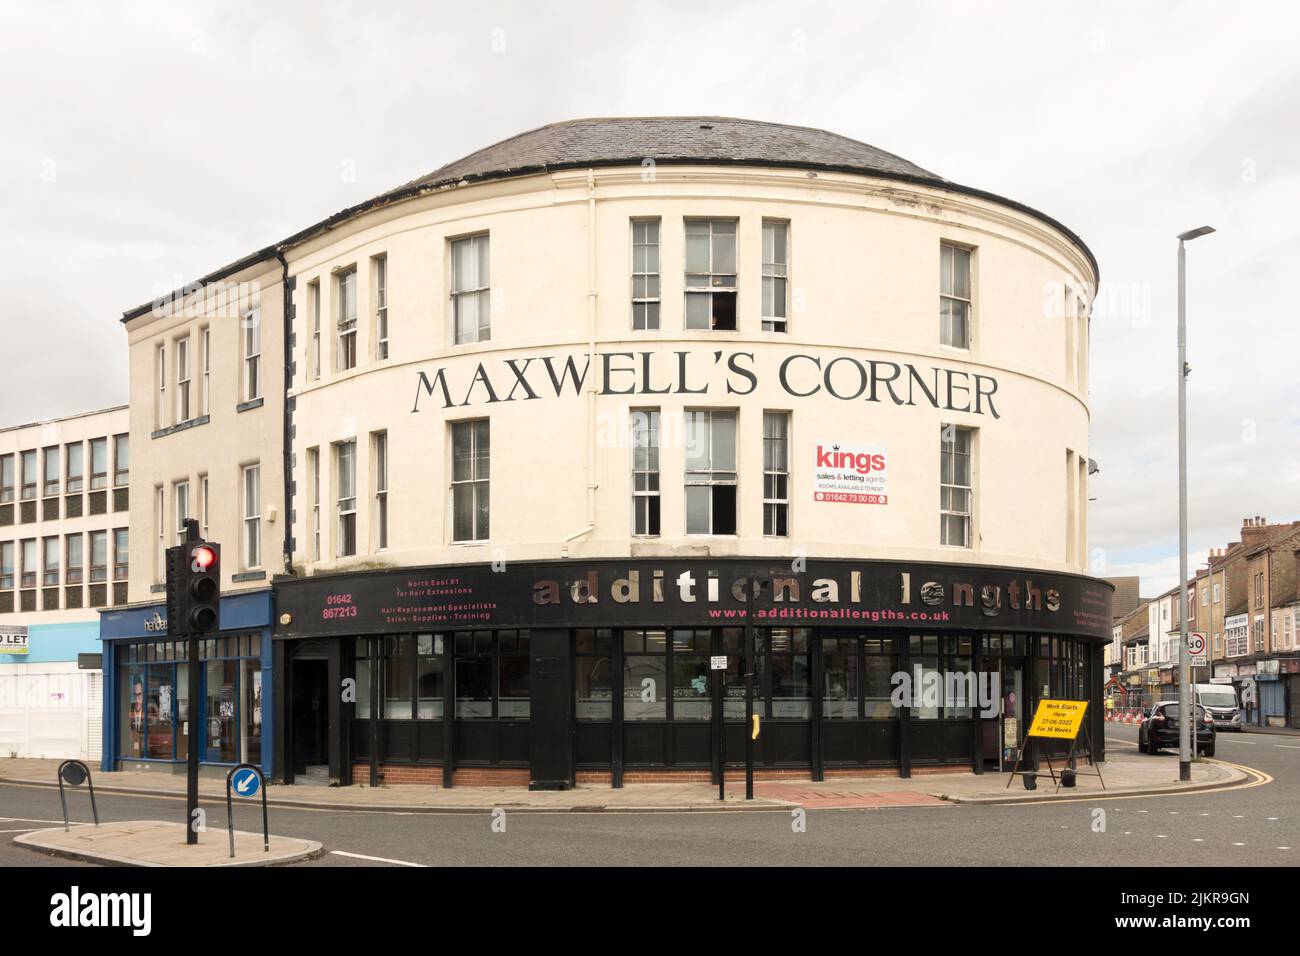 Autres longueurs coiffeurs sur Maxwell's Corner, Stockton on Tees, Co. Durham, Angleterre, Royaume-Uni Banque D'Images